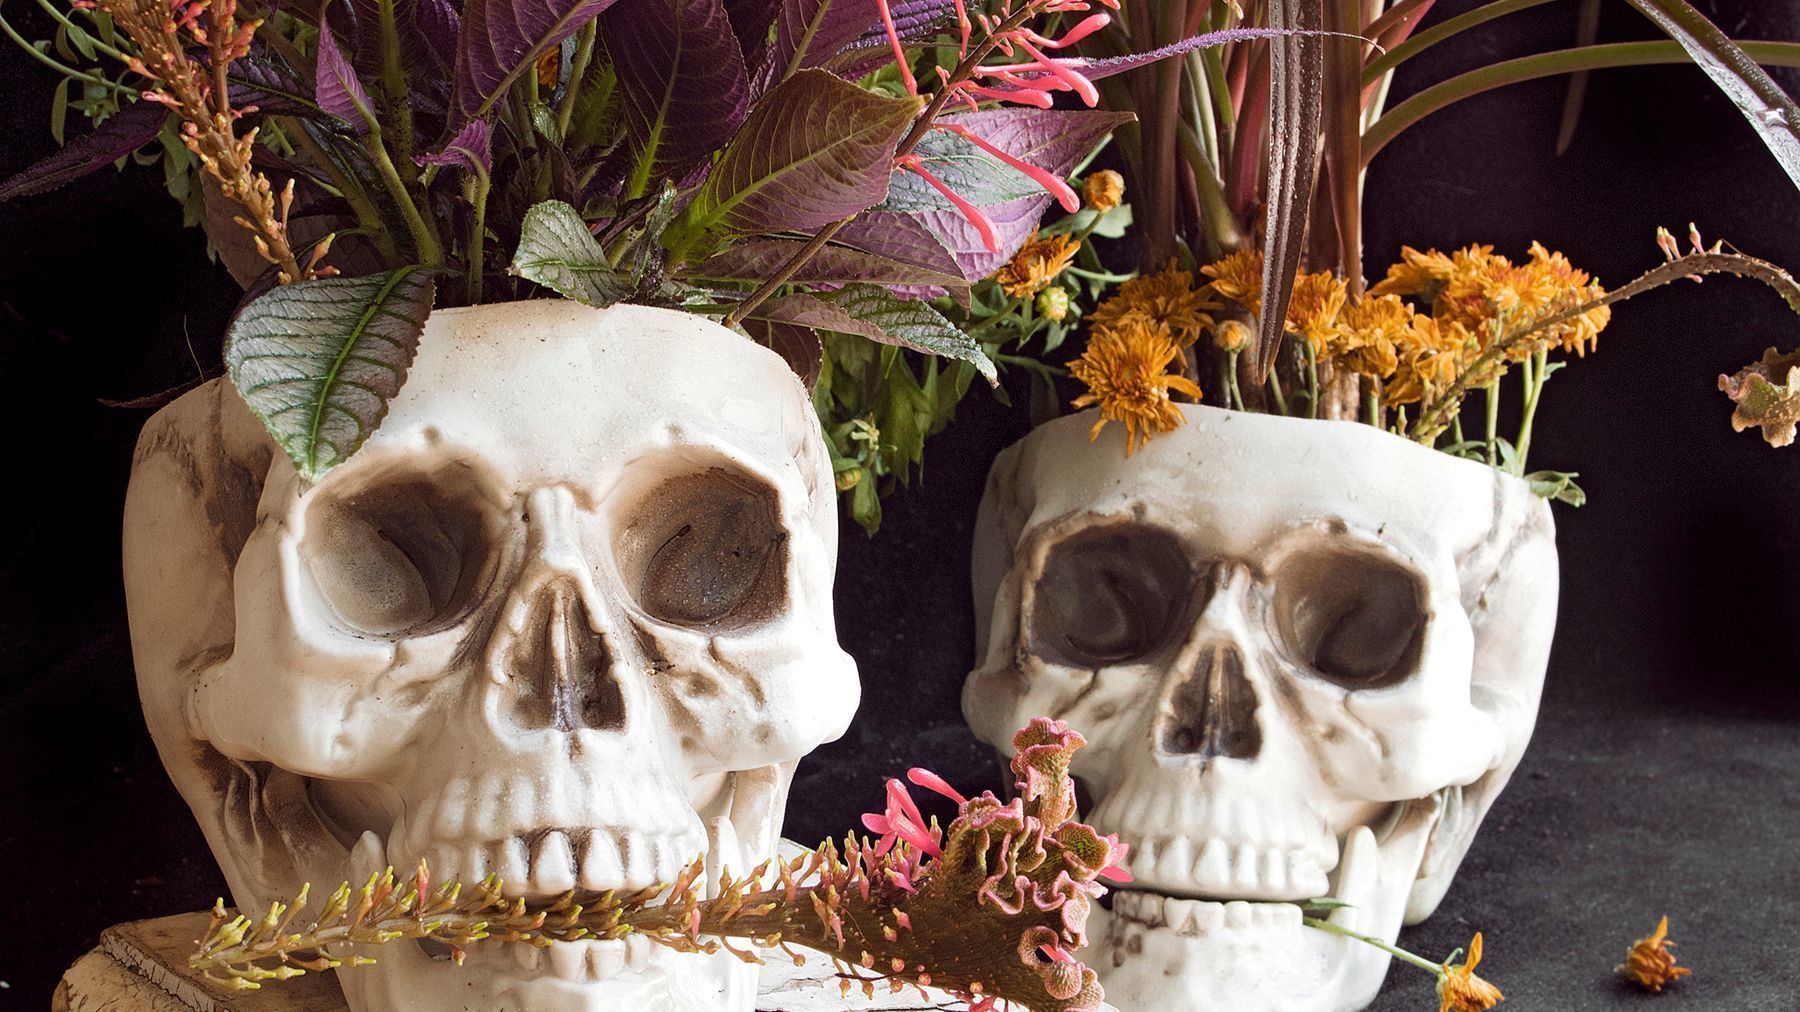 Fairchild's Tropical Garden Column: Let’s make Halloween a 'plant' holiday - Sun Sentinel